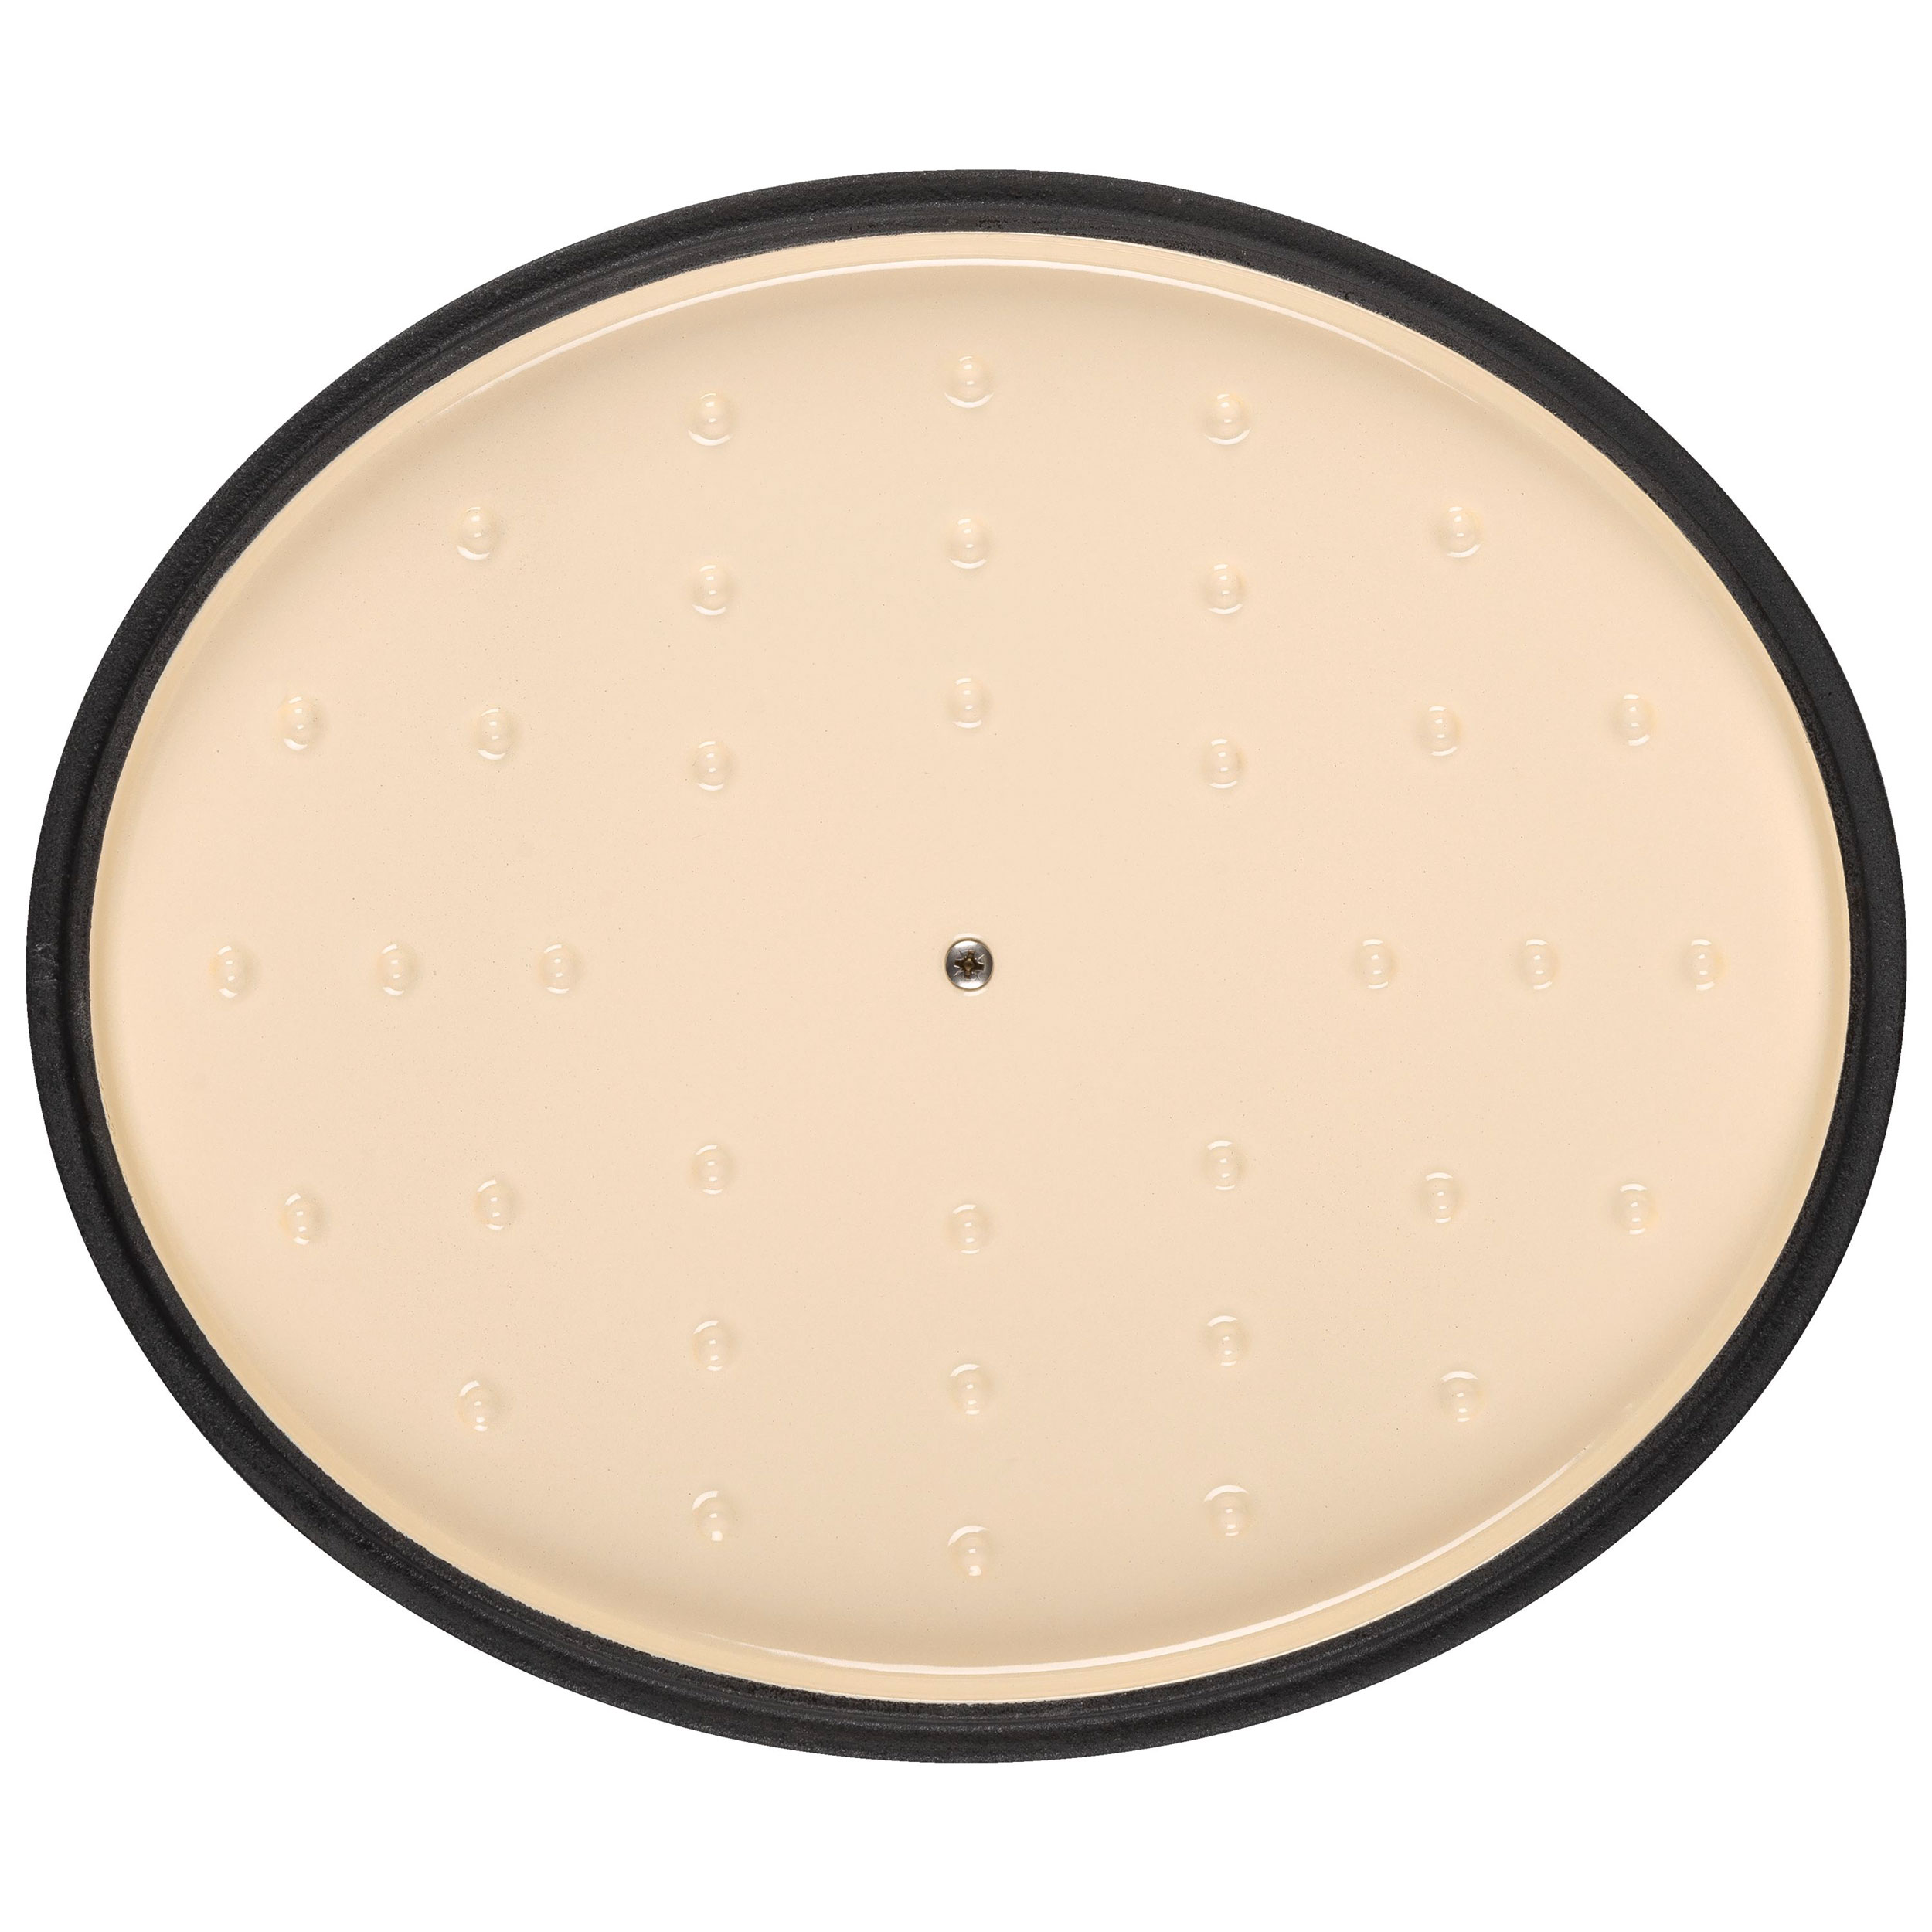 Cocotte oval 6,7l 33cm image number null